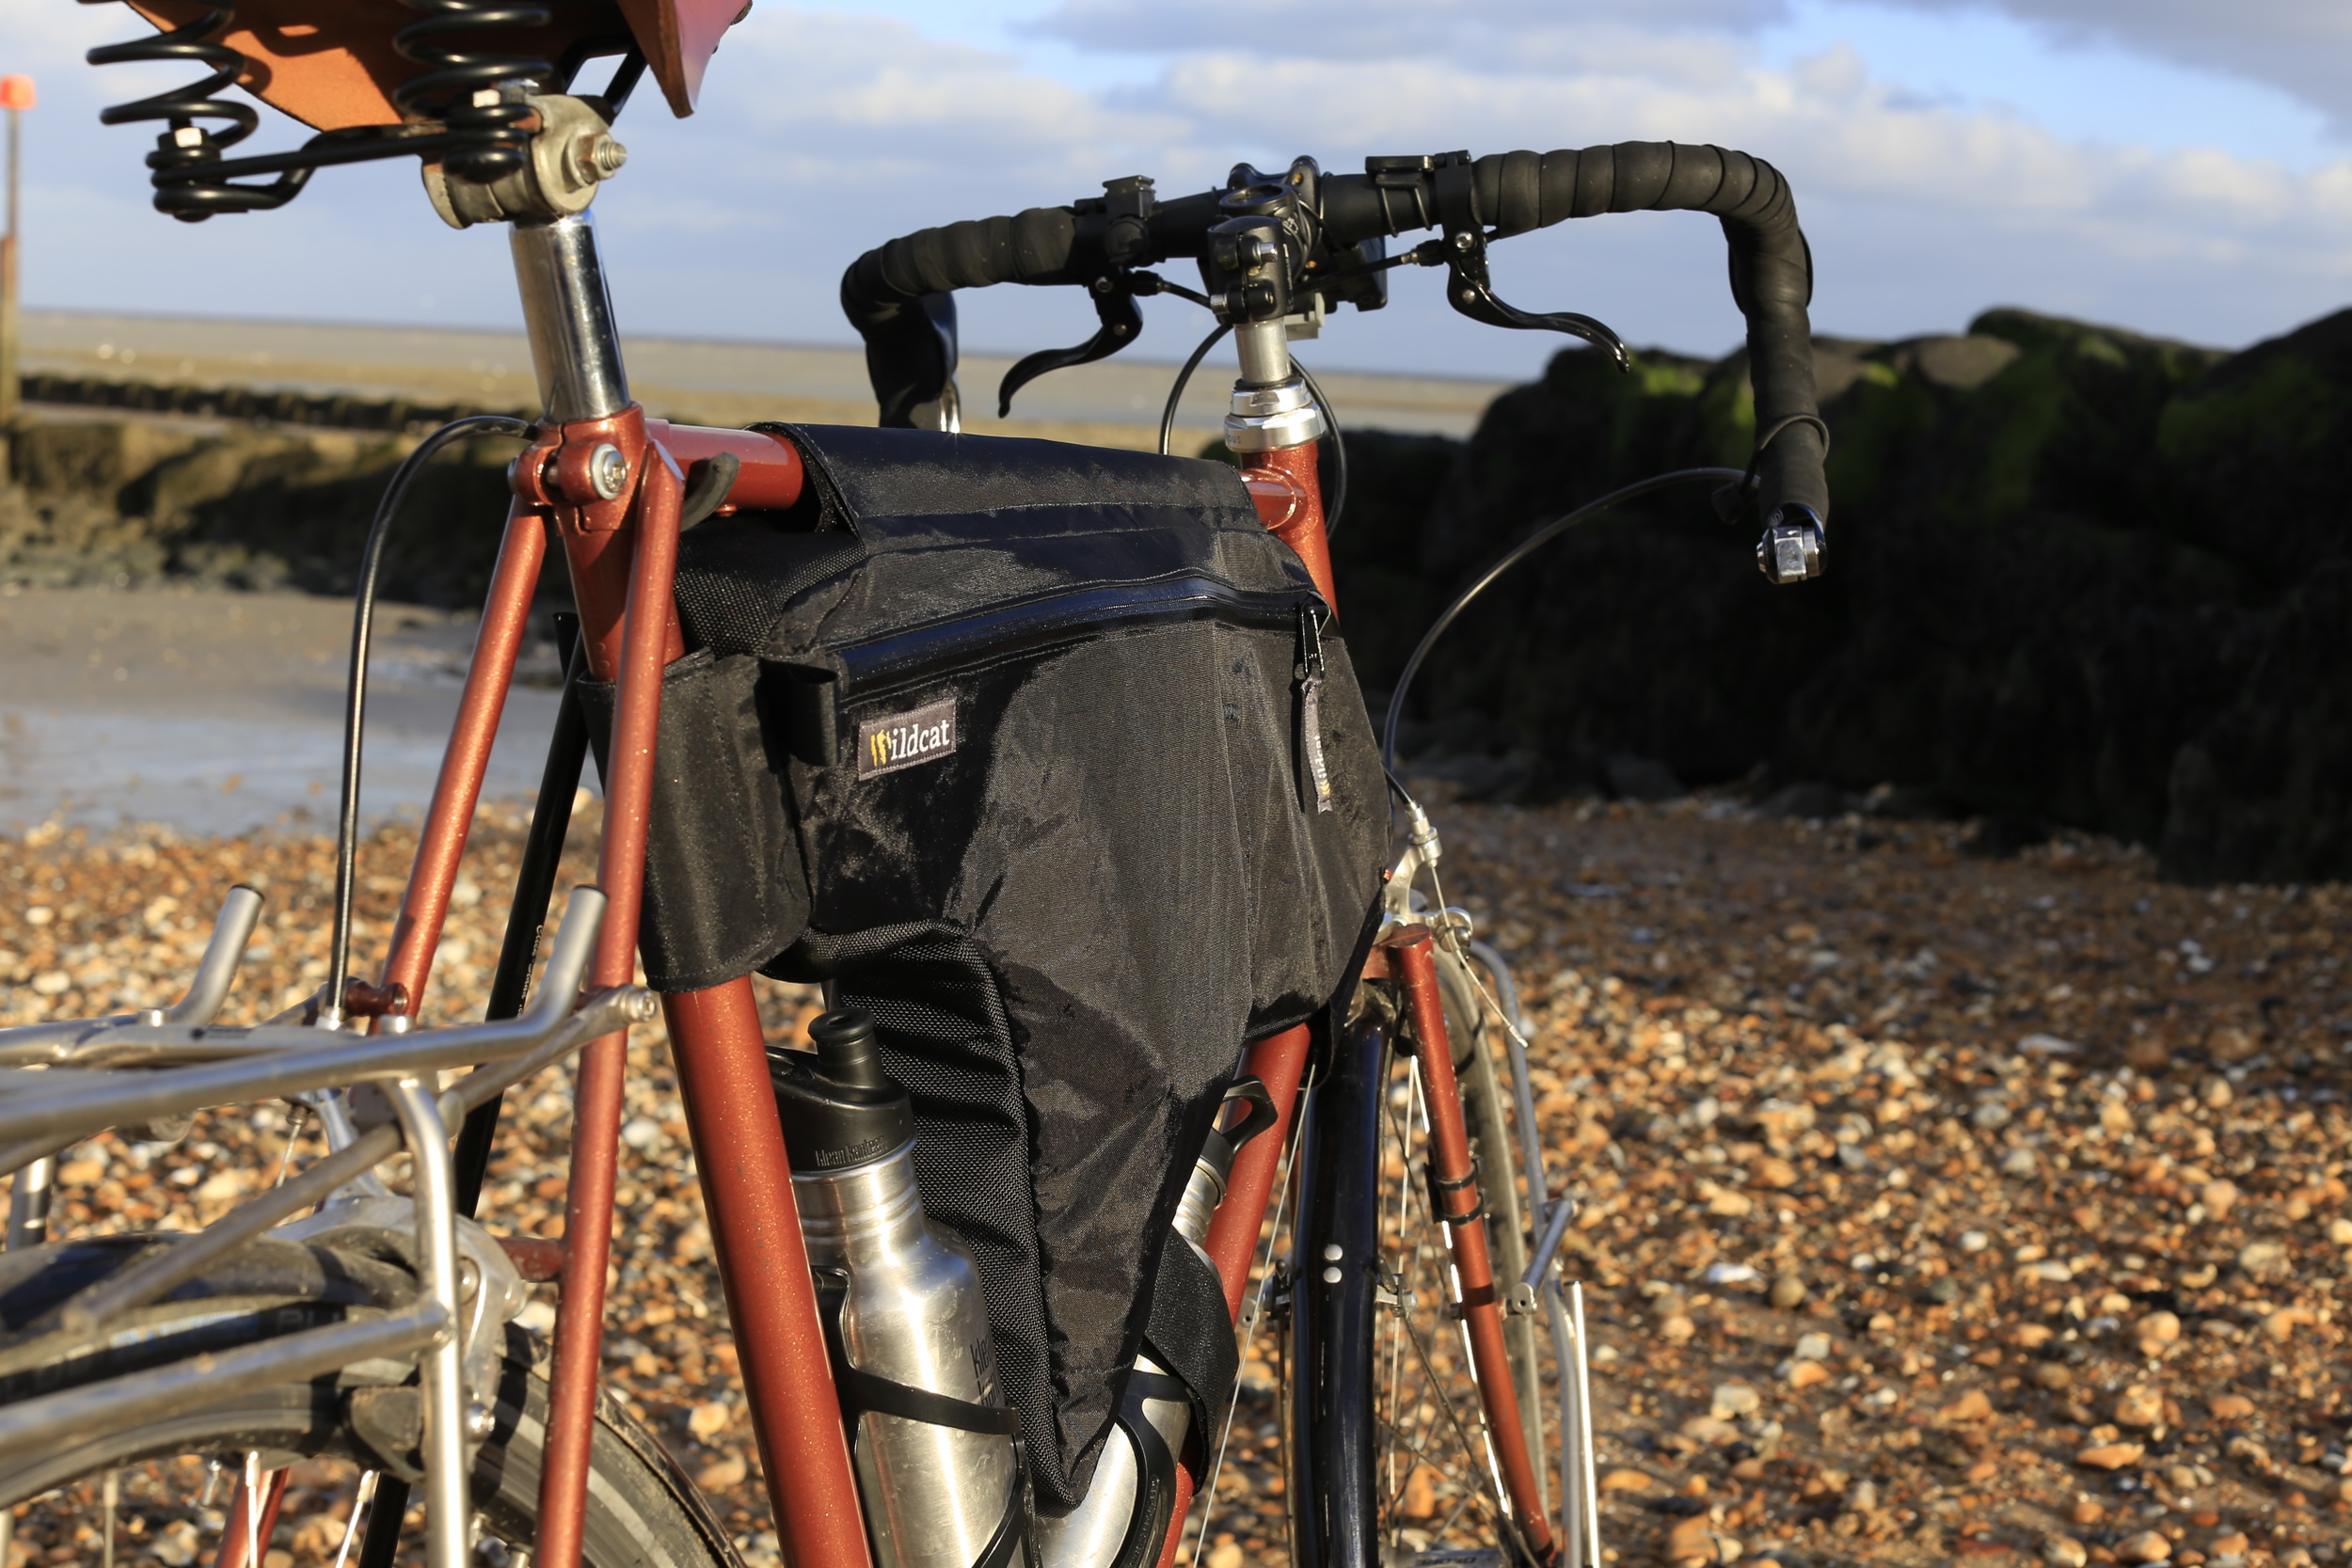 wildcat, wildcat gear, bikepacking, frame bag, custom tourer, cycle gear, review, cycling blog, cycling website